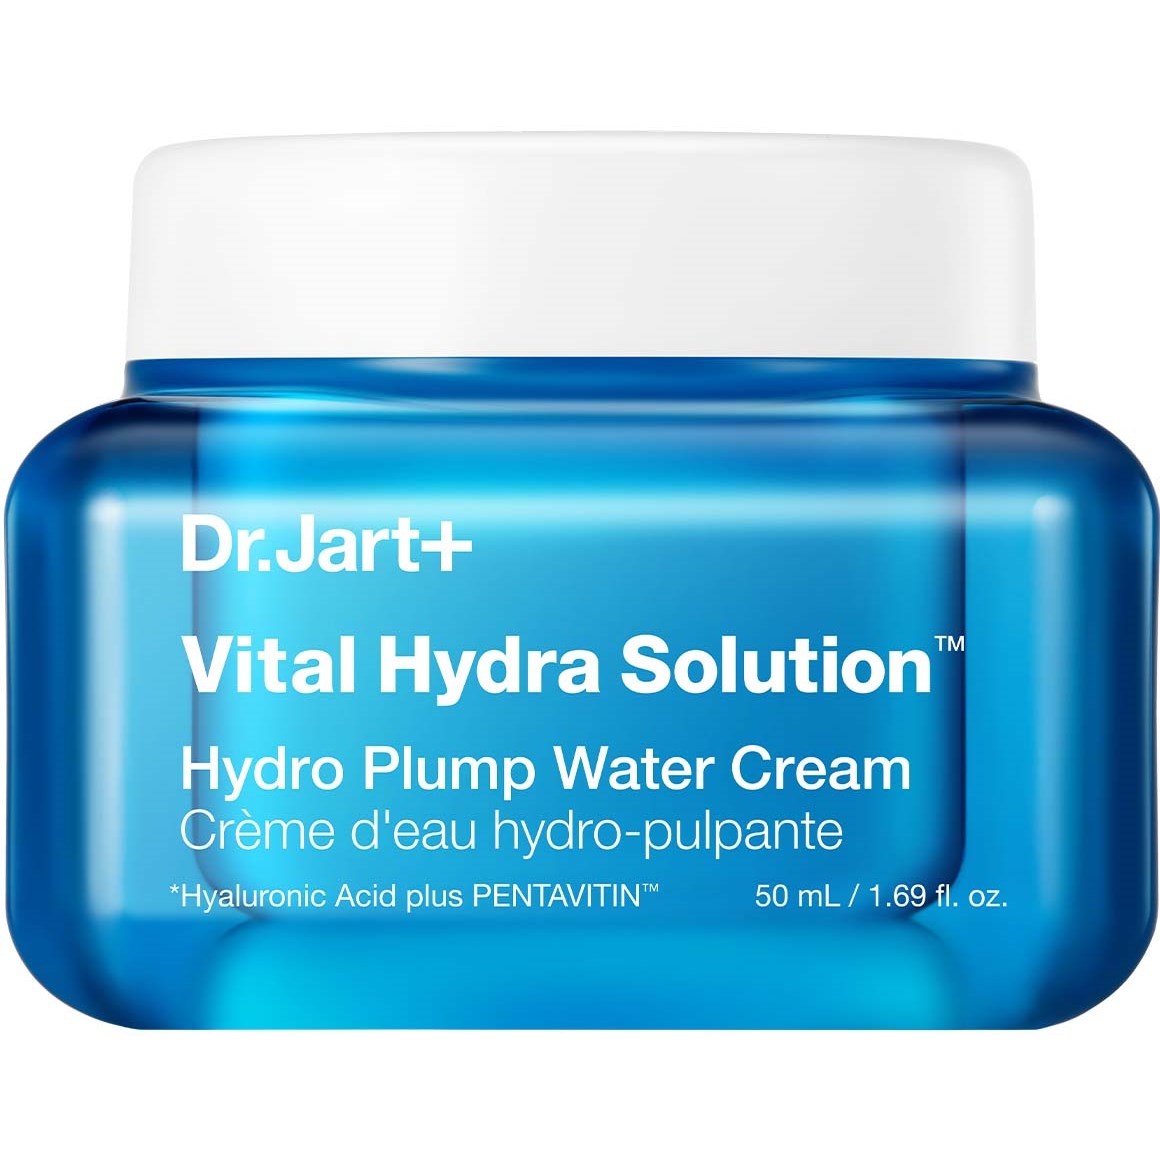 Bilde av Dr.jart+ Vital Hydra Solution Hydro Plump Water Cream 50 Ml